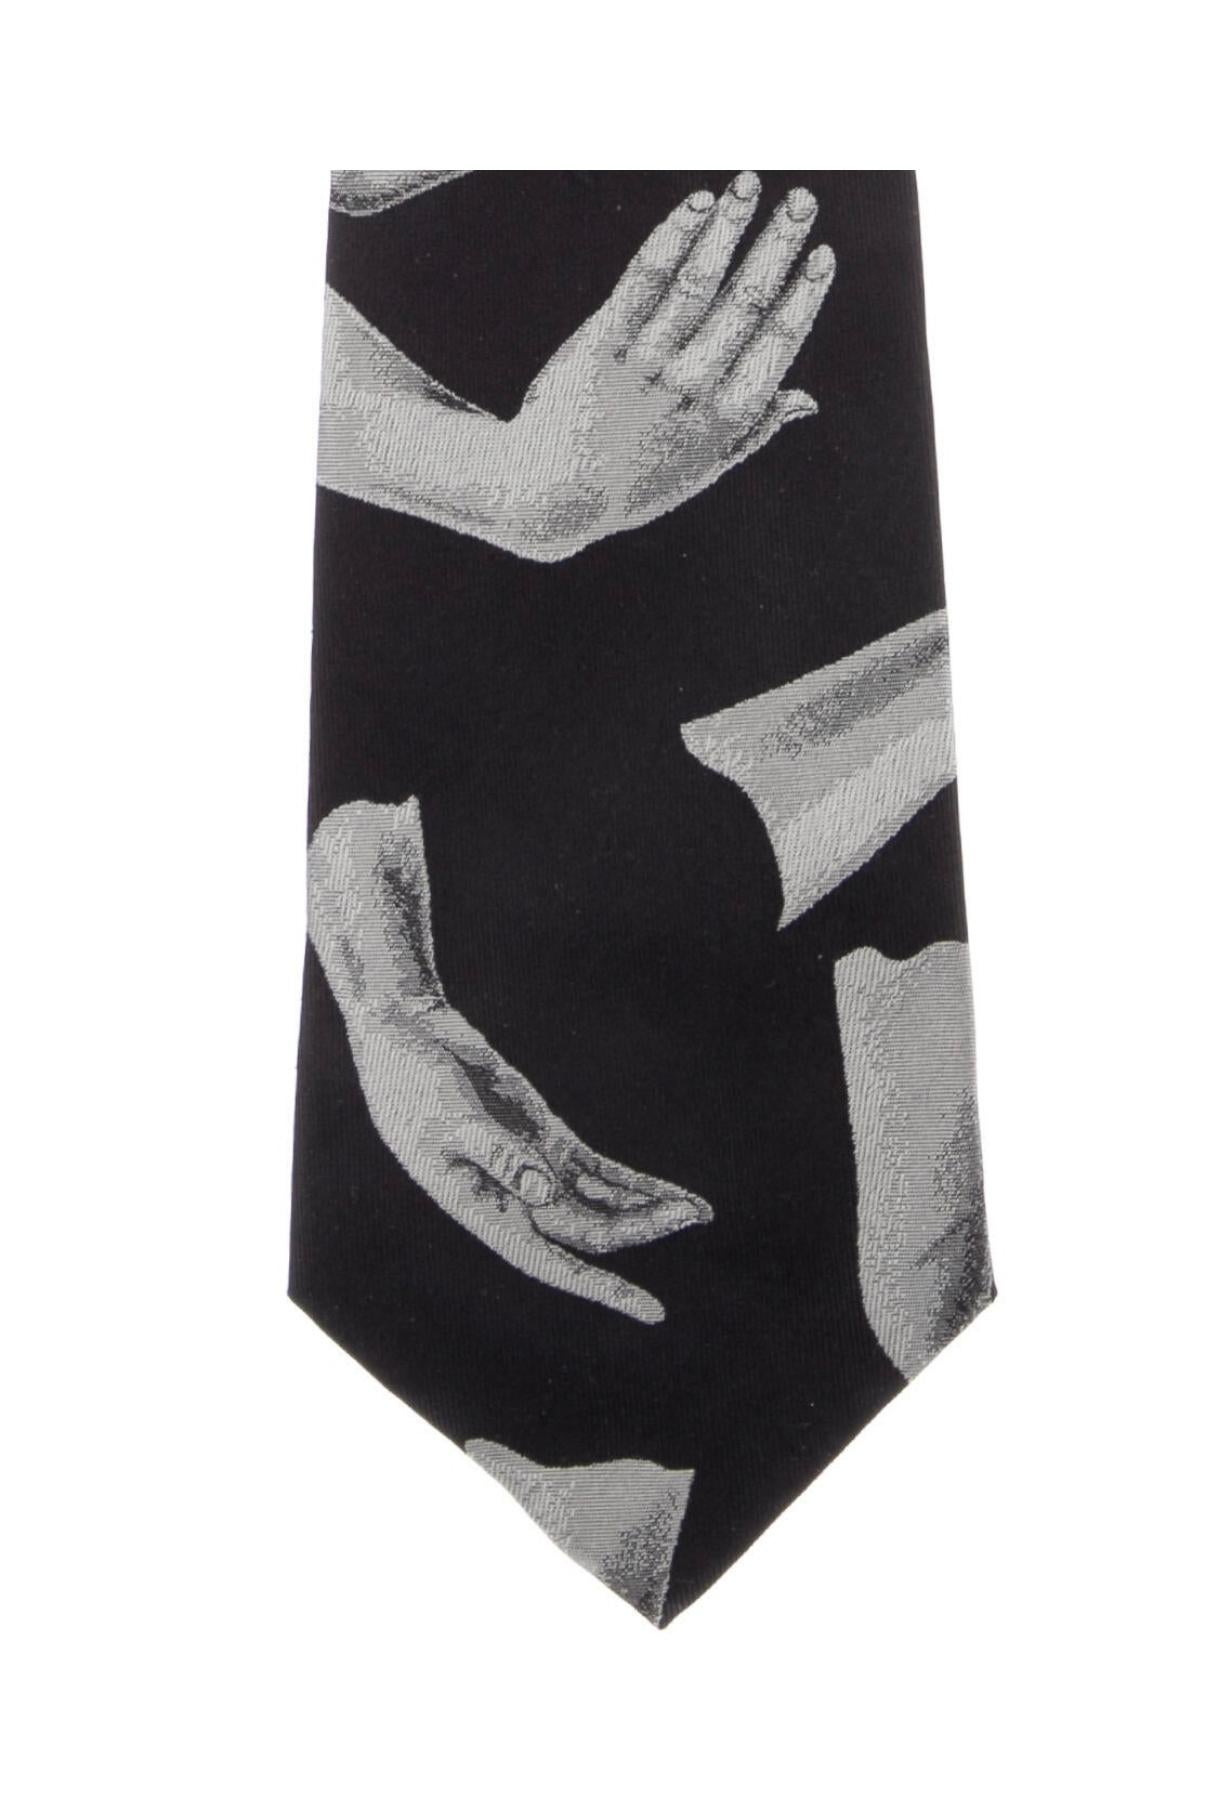 Jean Paul Gaultier silk tie with hand print

Condition: Excellent
100% silk
3